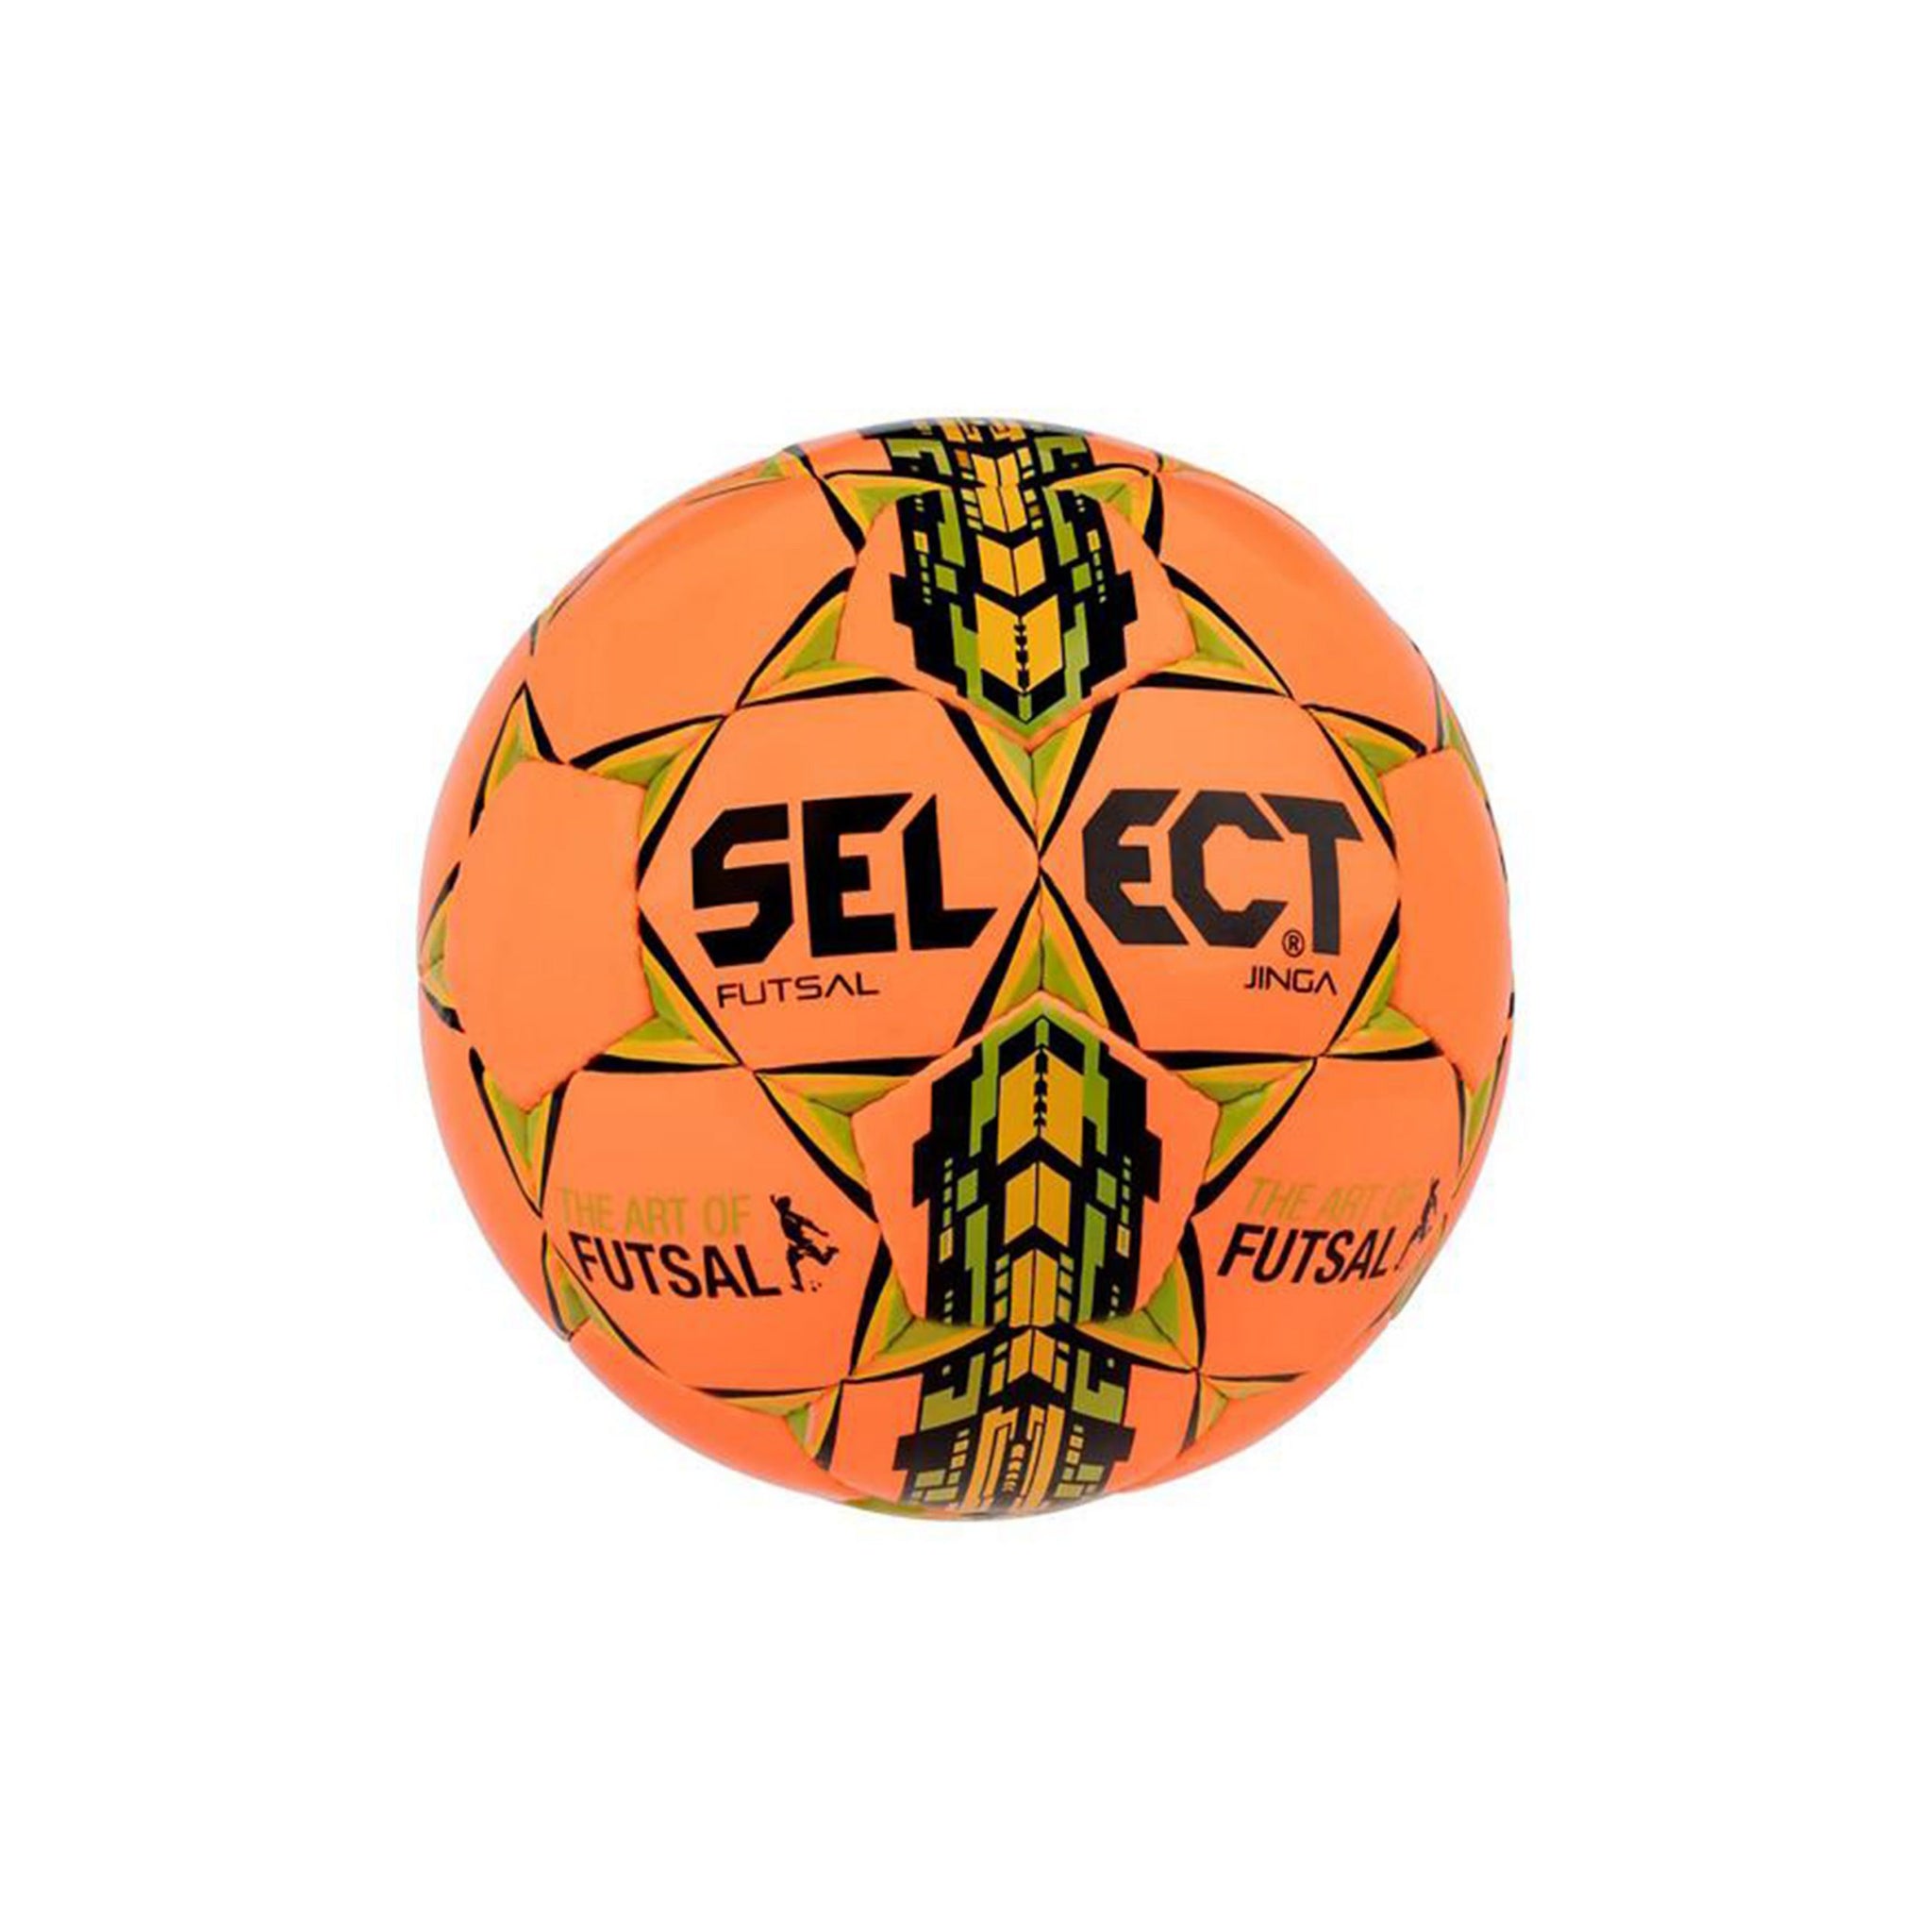 SELECT Futsal Jinga